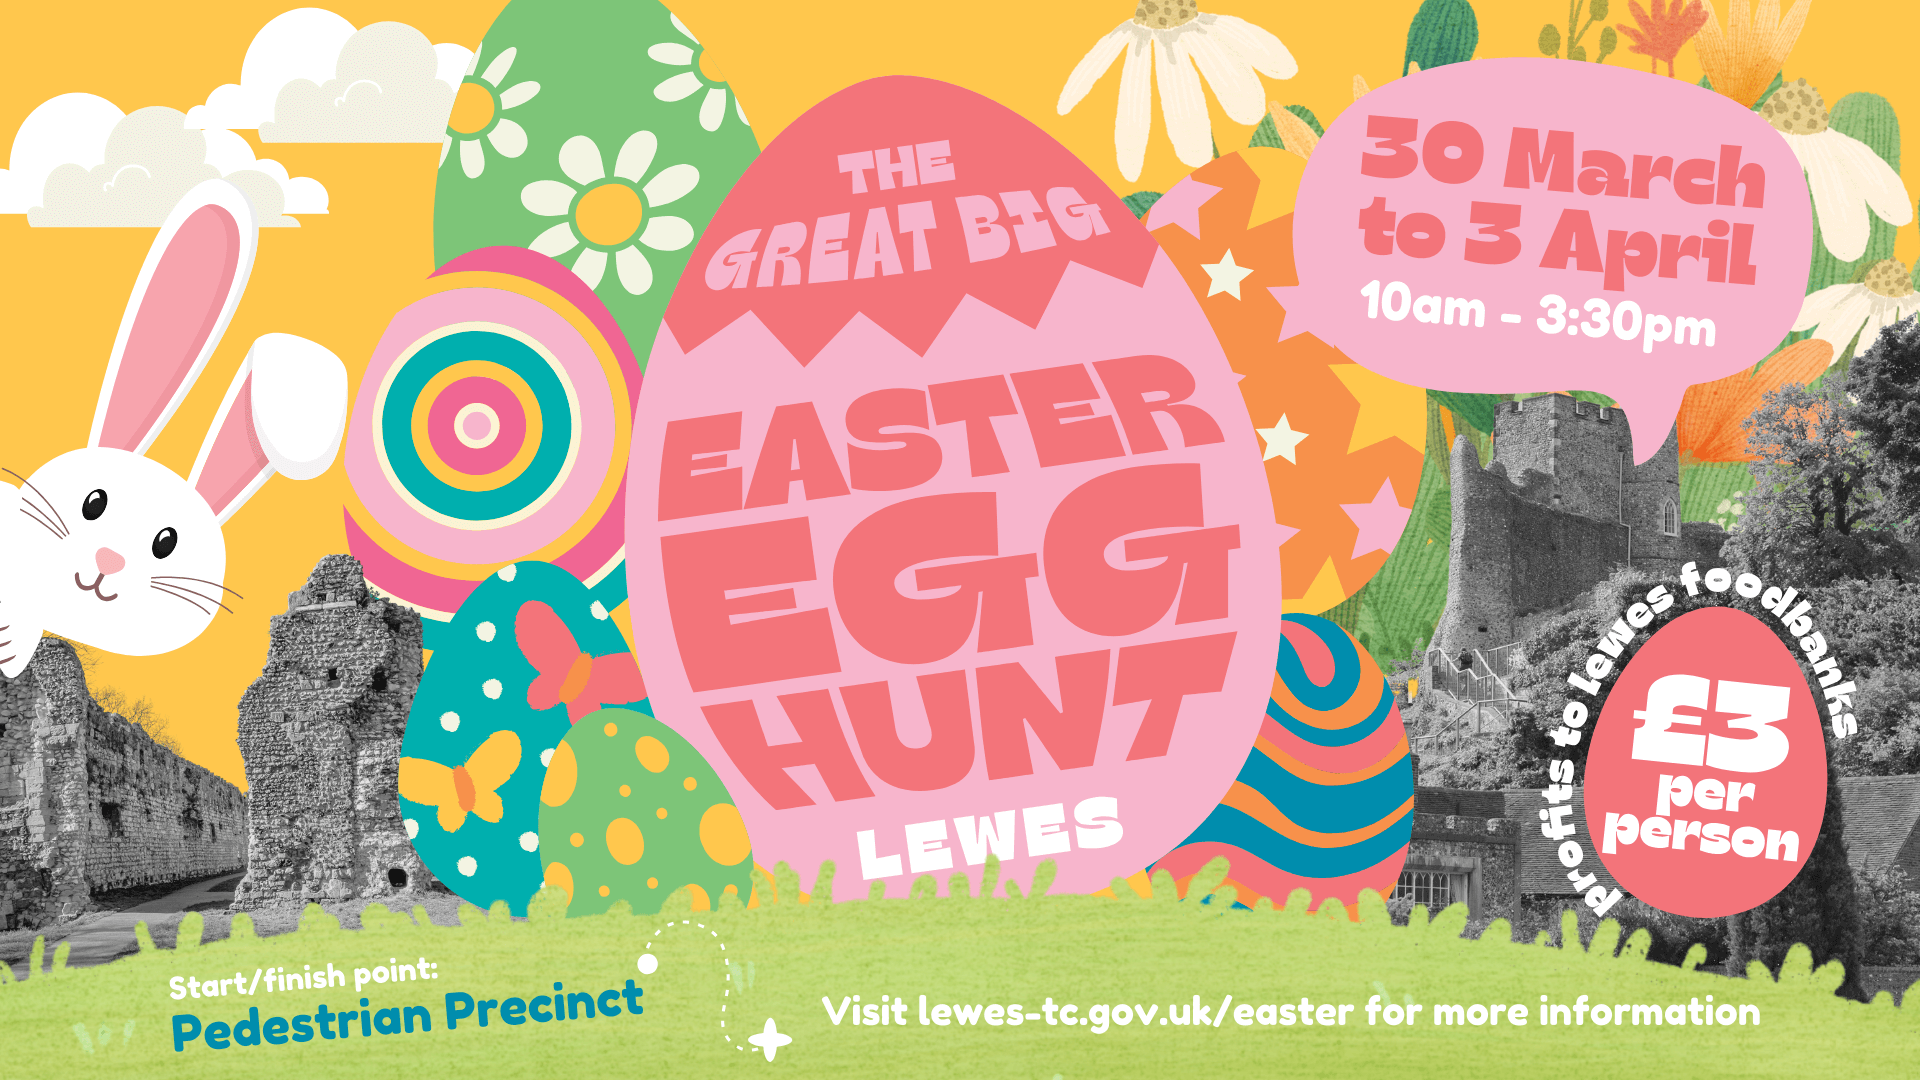 The Great Big Easter Egg Hunt Lewes, 30 March - 3 April